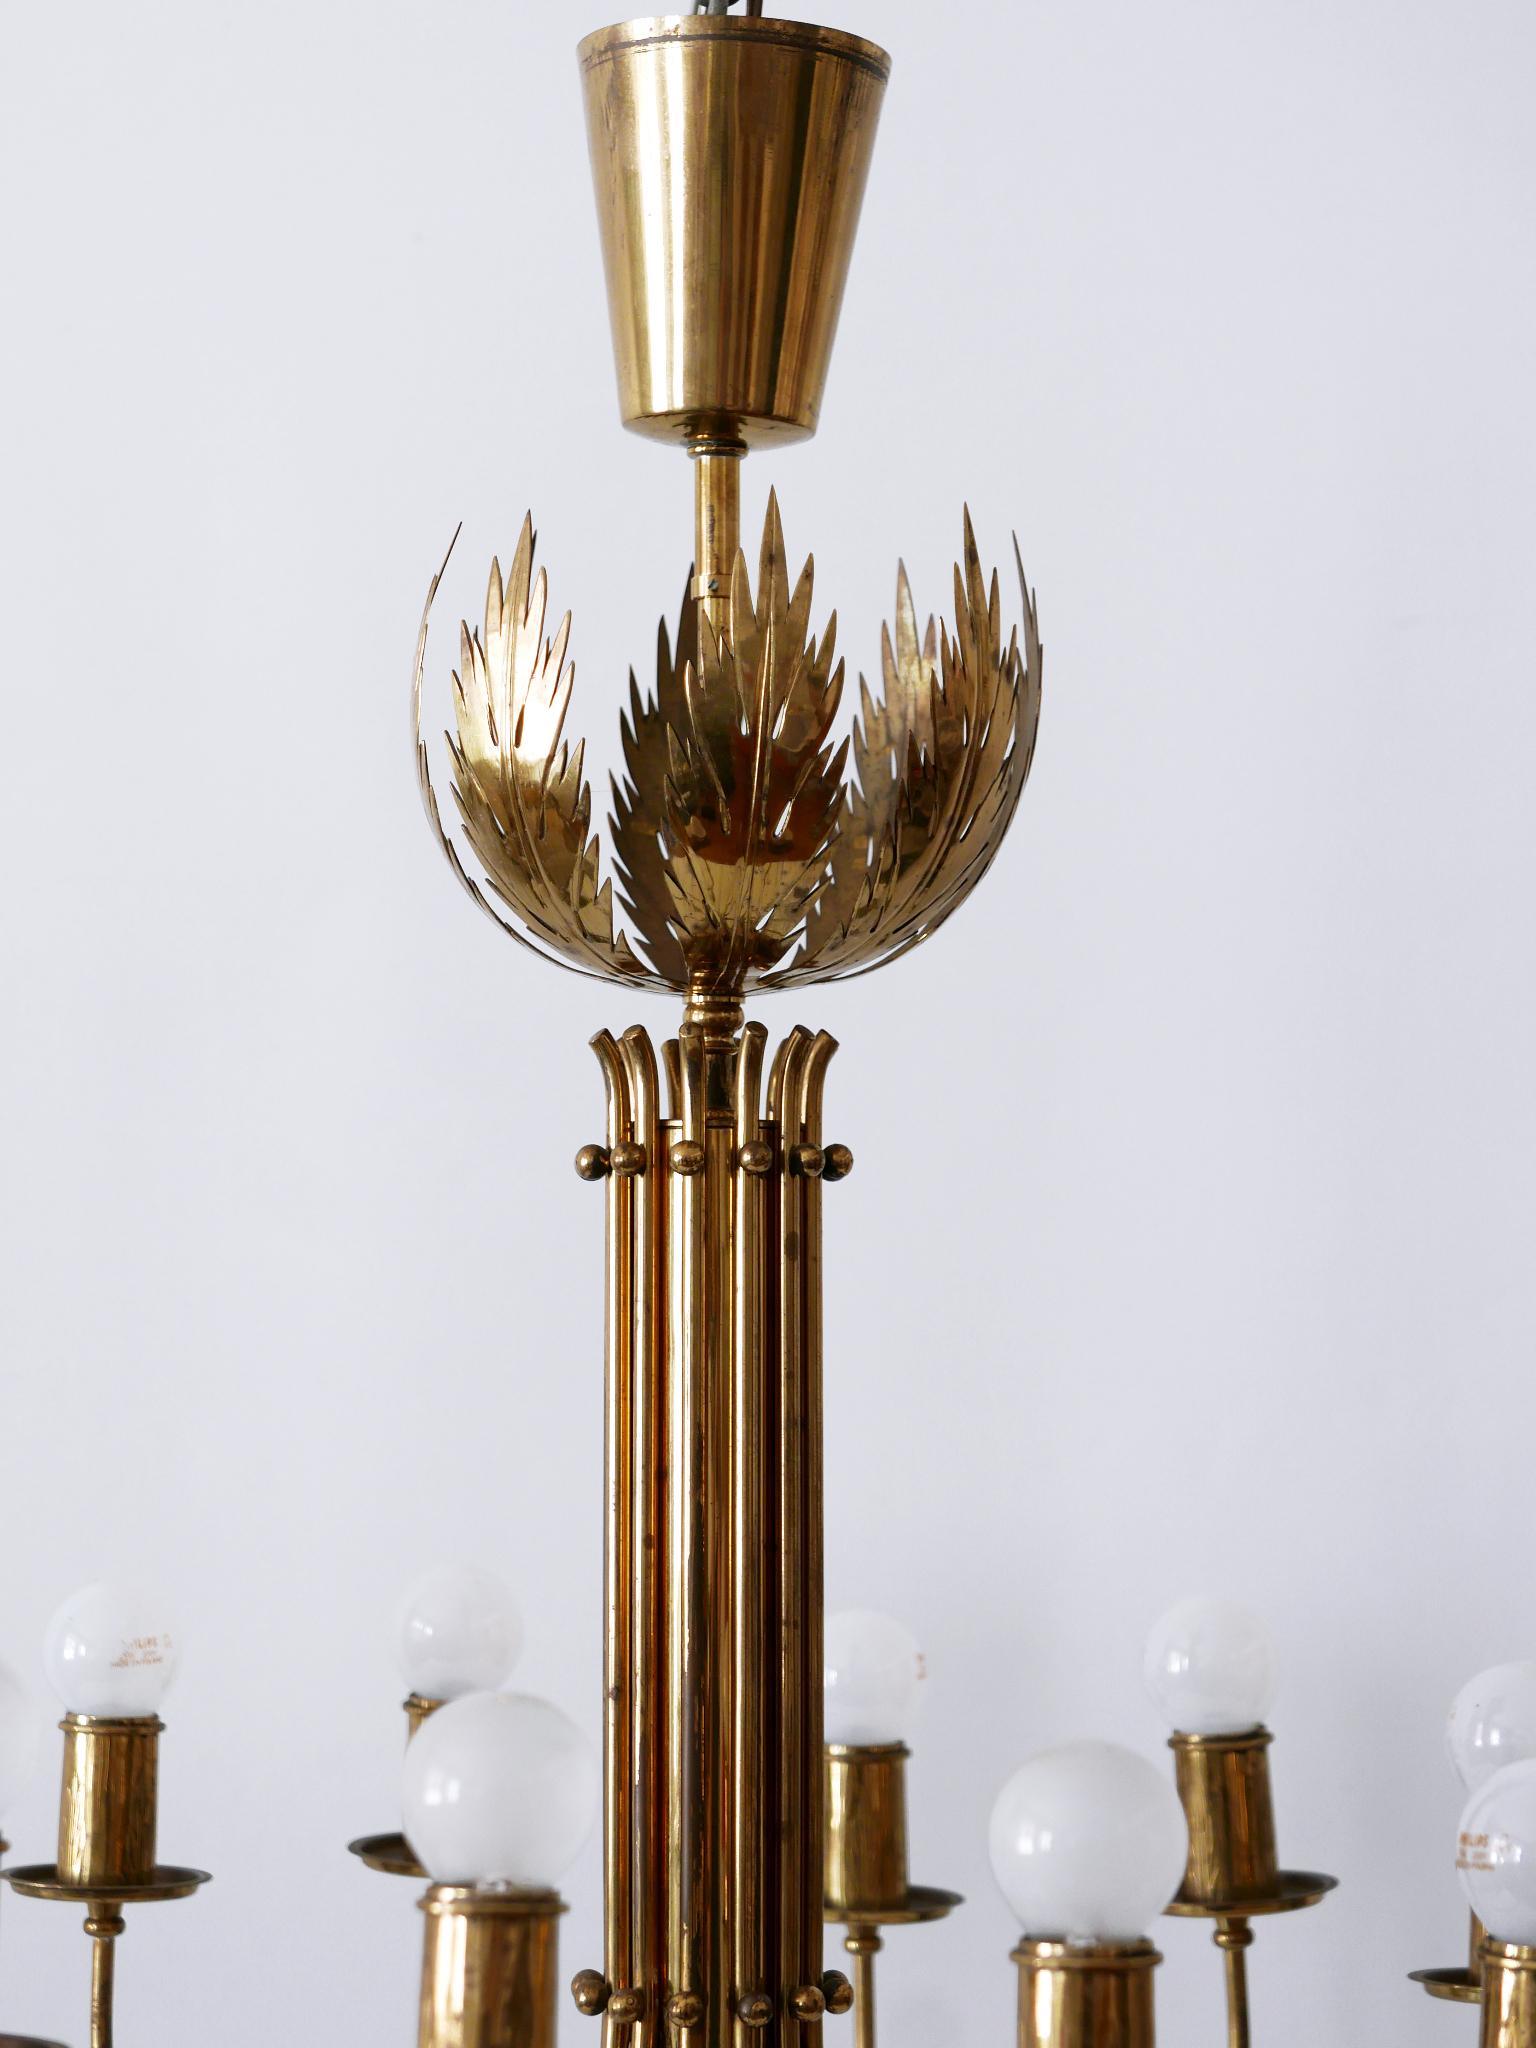 Rare 12-Armed Brass Chandeliers or Pendant Lamps by Vereinigte Werkstätten 1950s For Sale 10